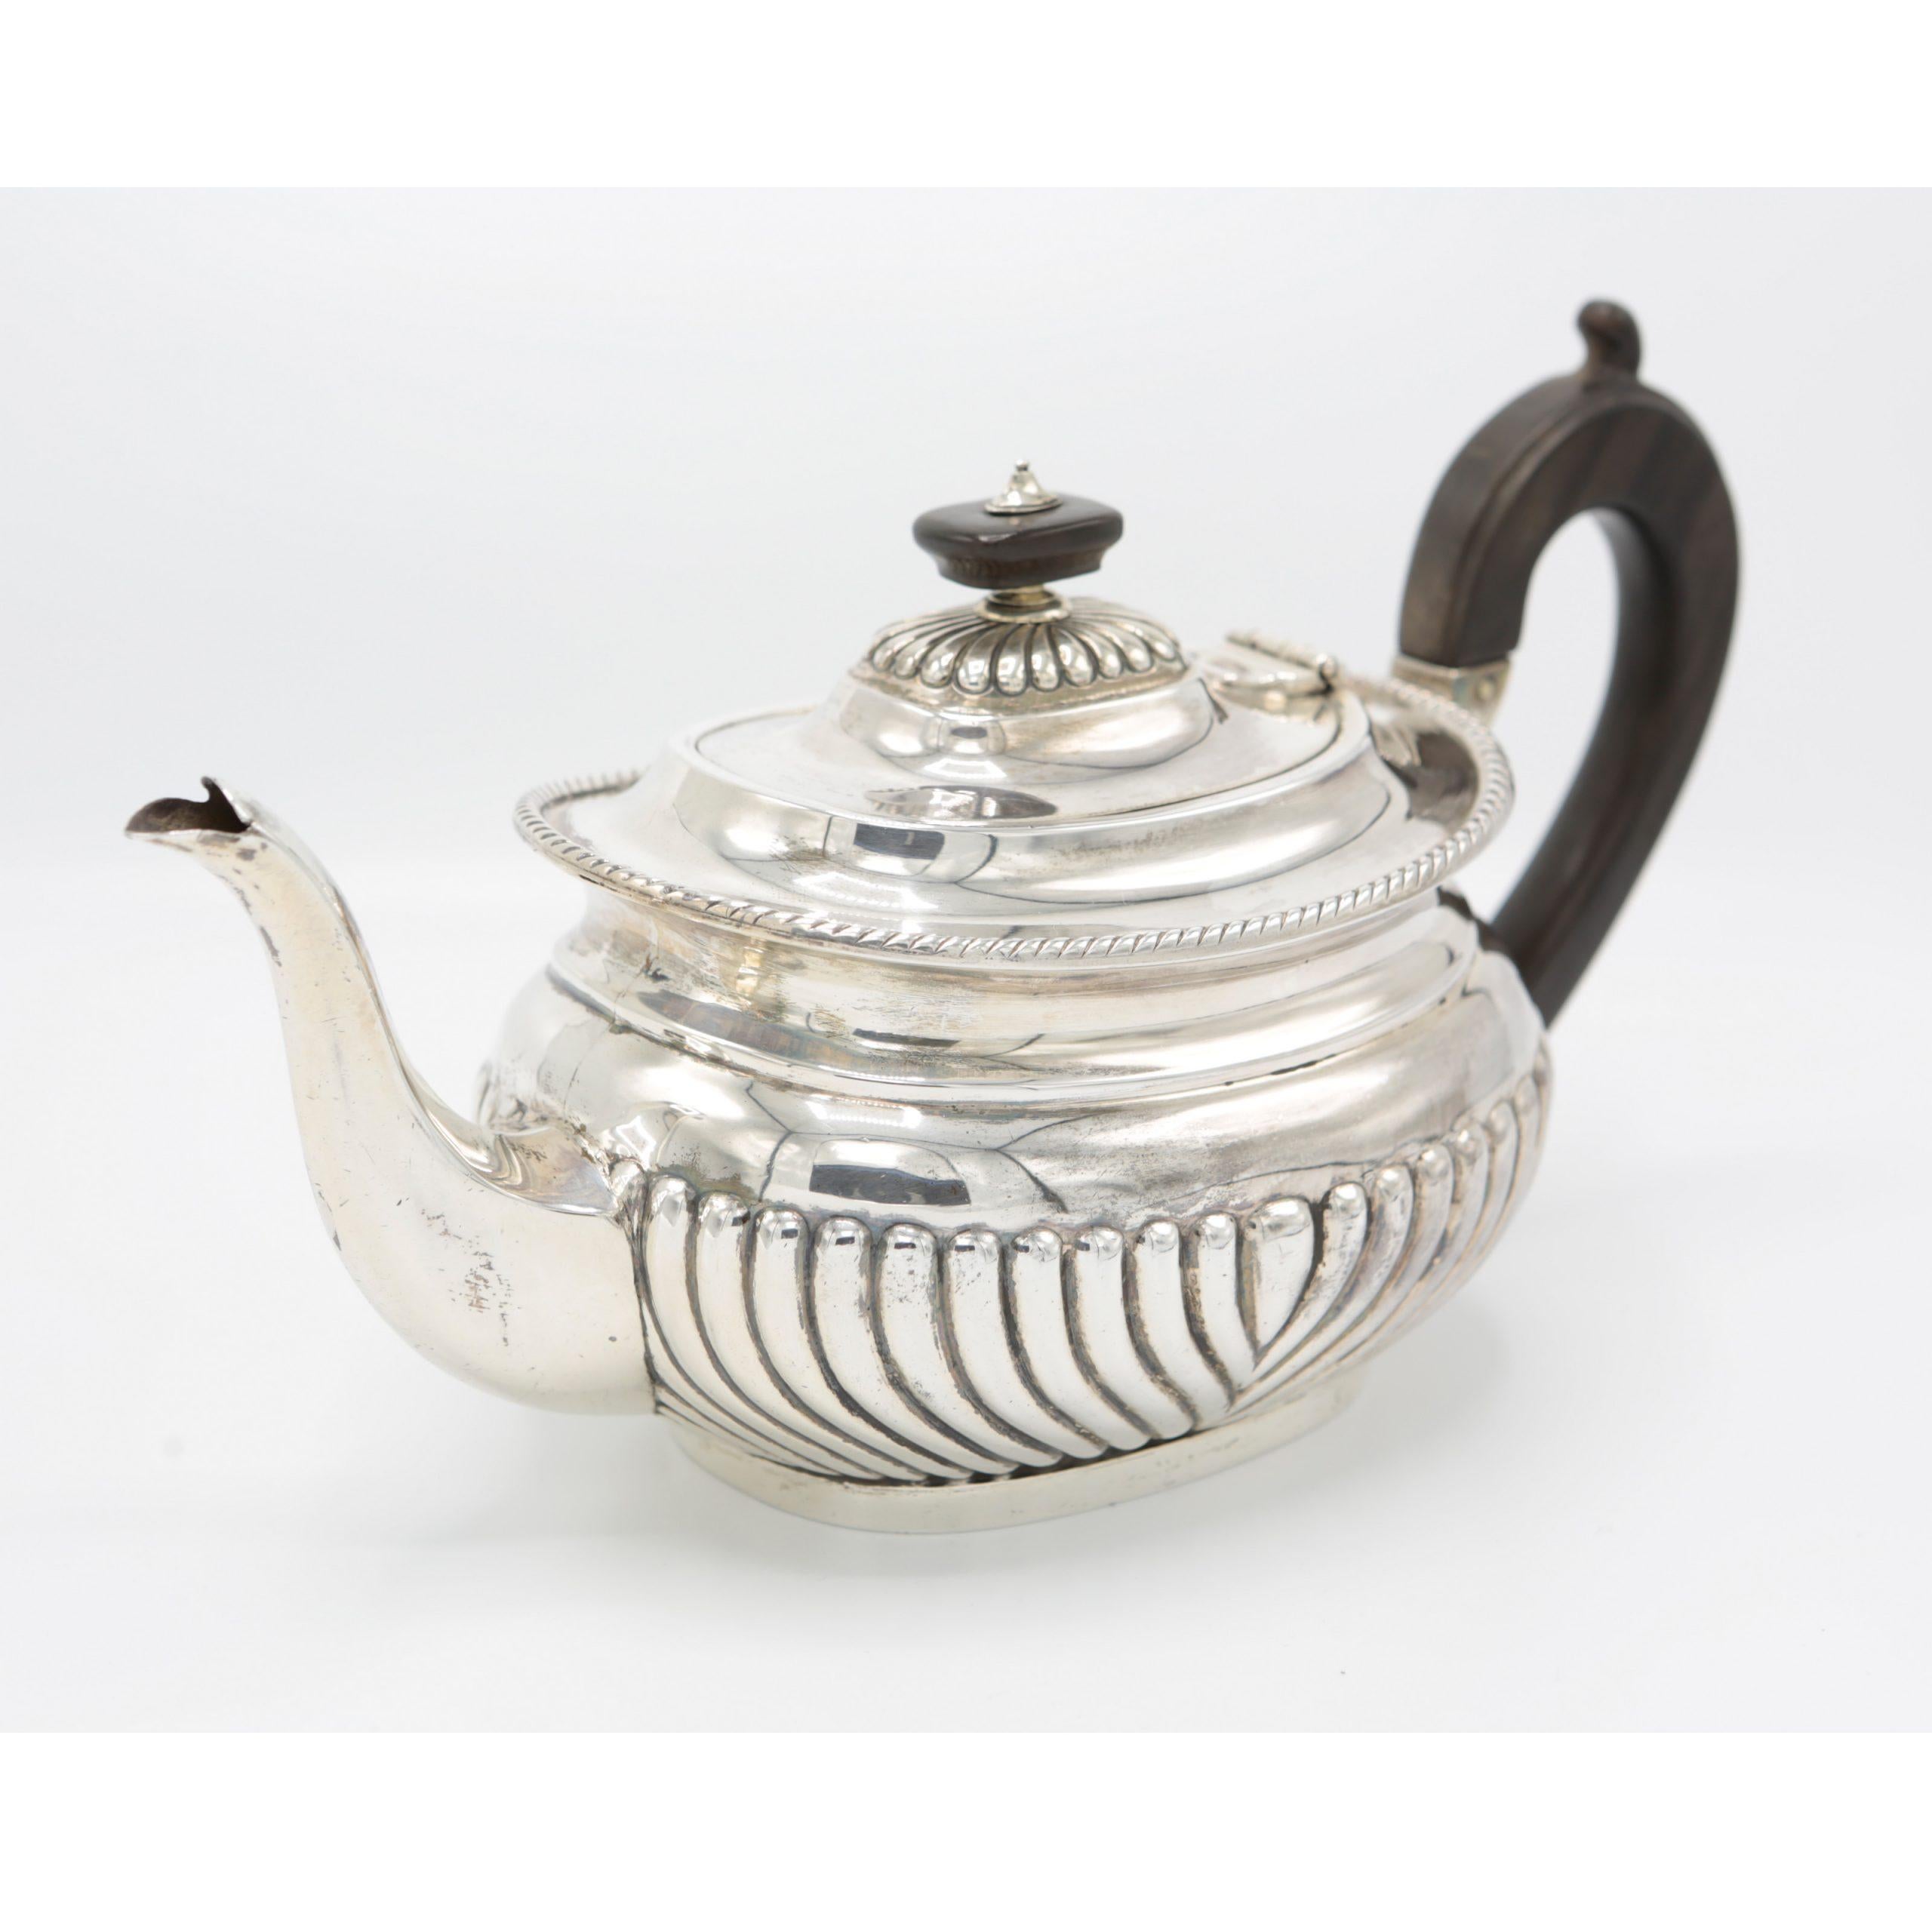 Teapot, Queen Anne style, 925/- sterling silver, London 1898, hallmarked

Height 13.5 cm, width 25 cm, depth 10.5 cm